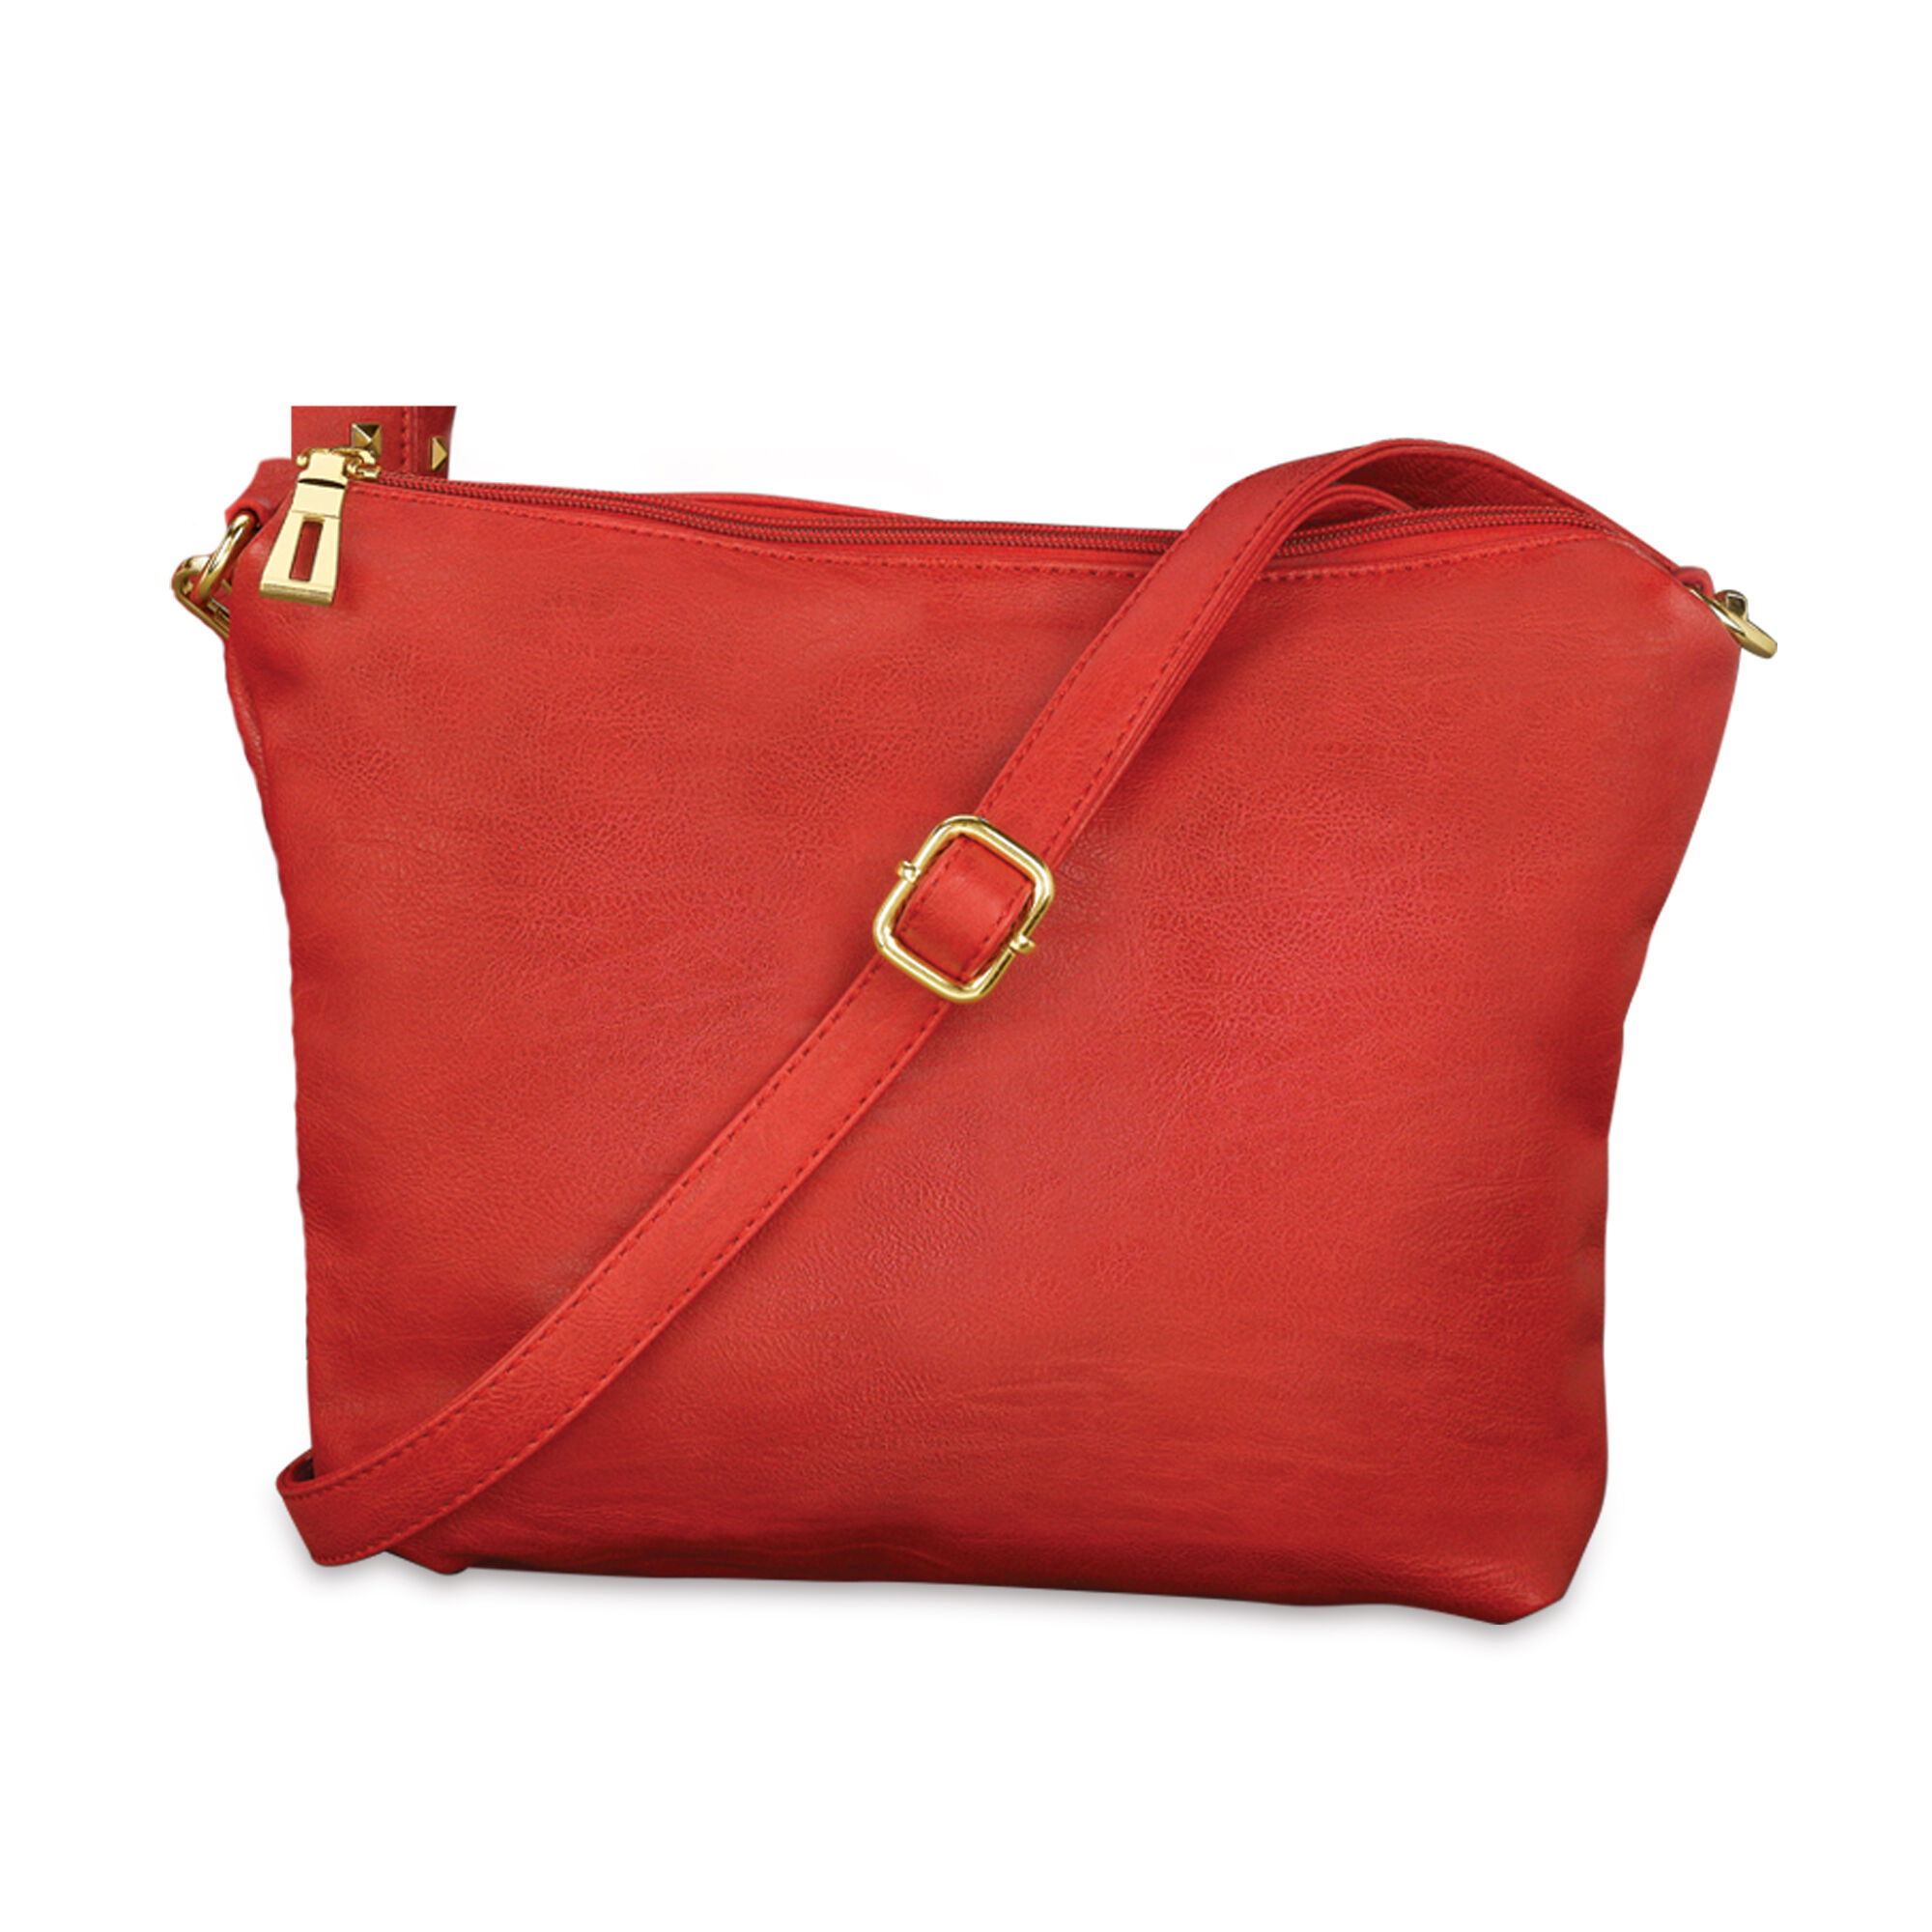 The Ruby Royale Handbag 0068 0041 d crossbody